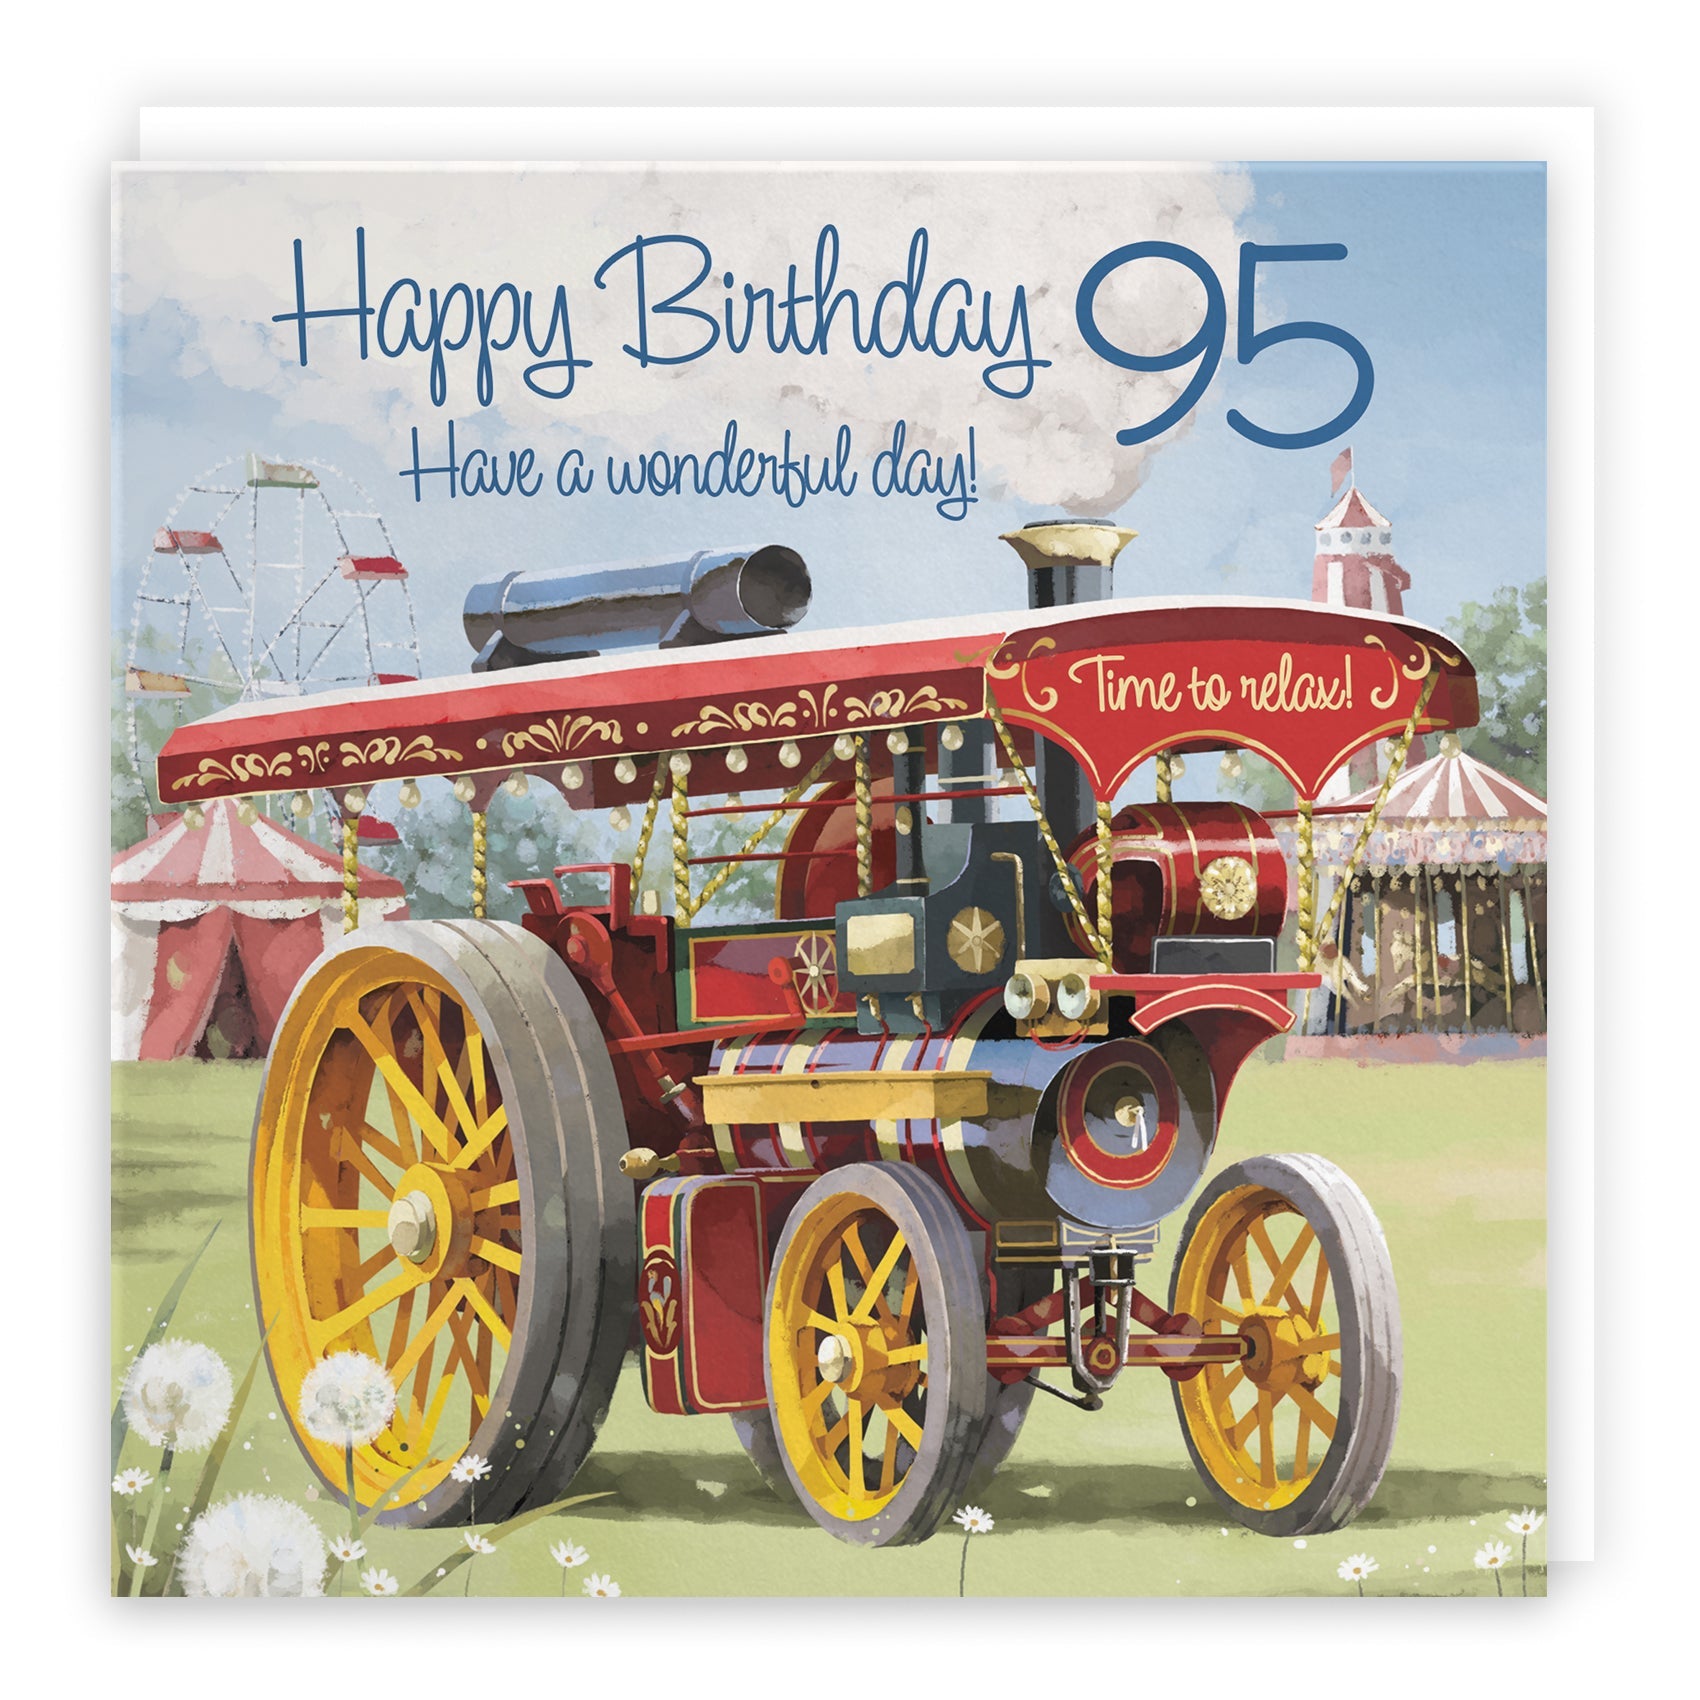 95th Birthday Cards - Age 95